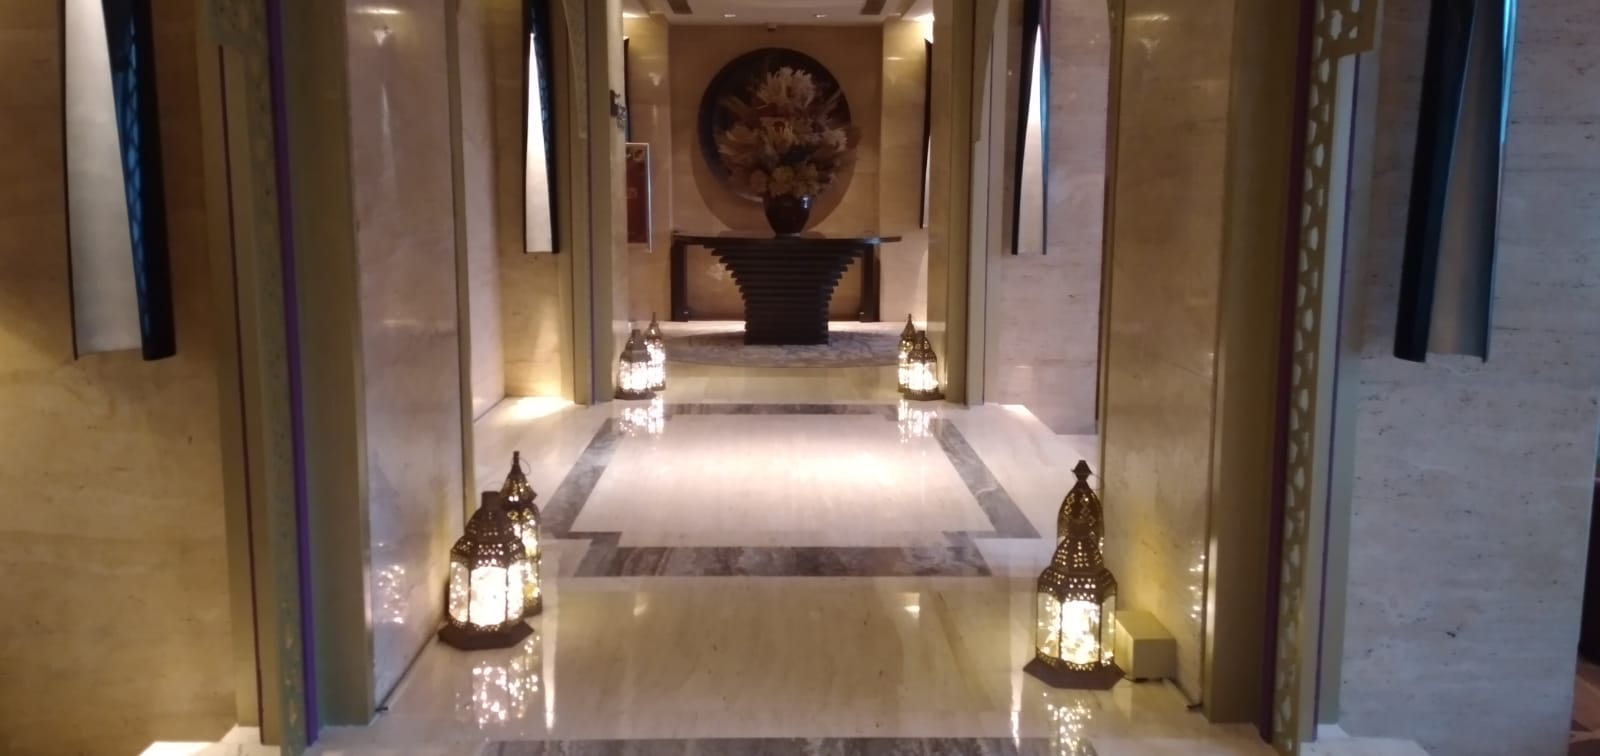 FOTO Lampu-lampu Indah di Lantai Lobby Nirwana Lounge Hotel Indonesia Kempinski, Jakarta